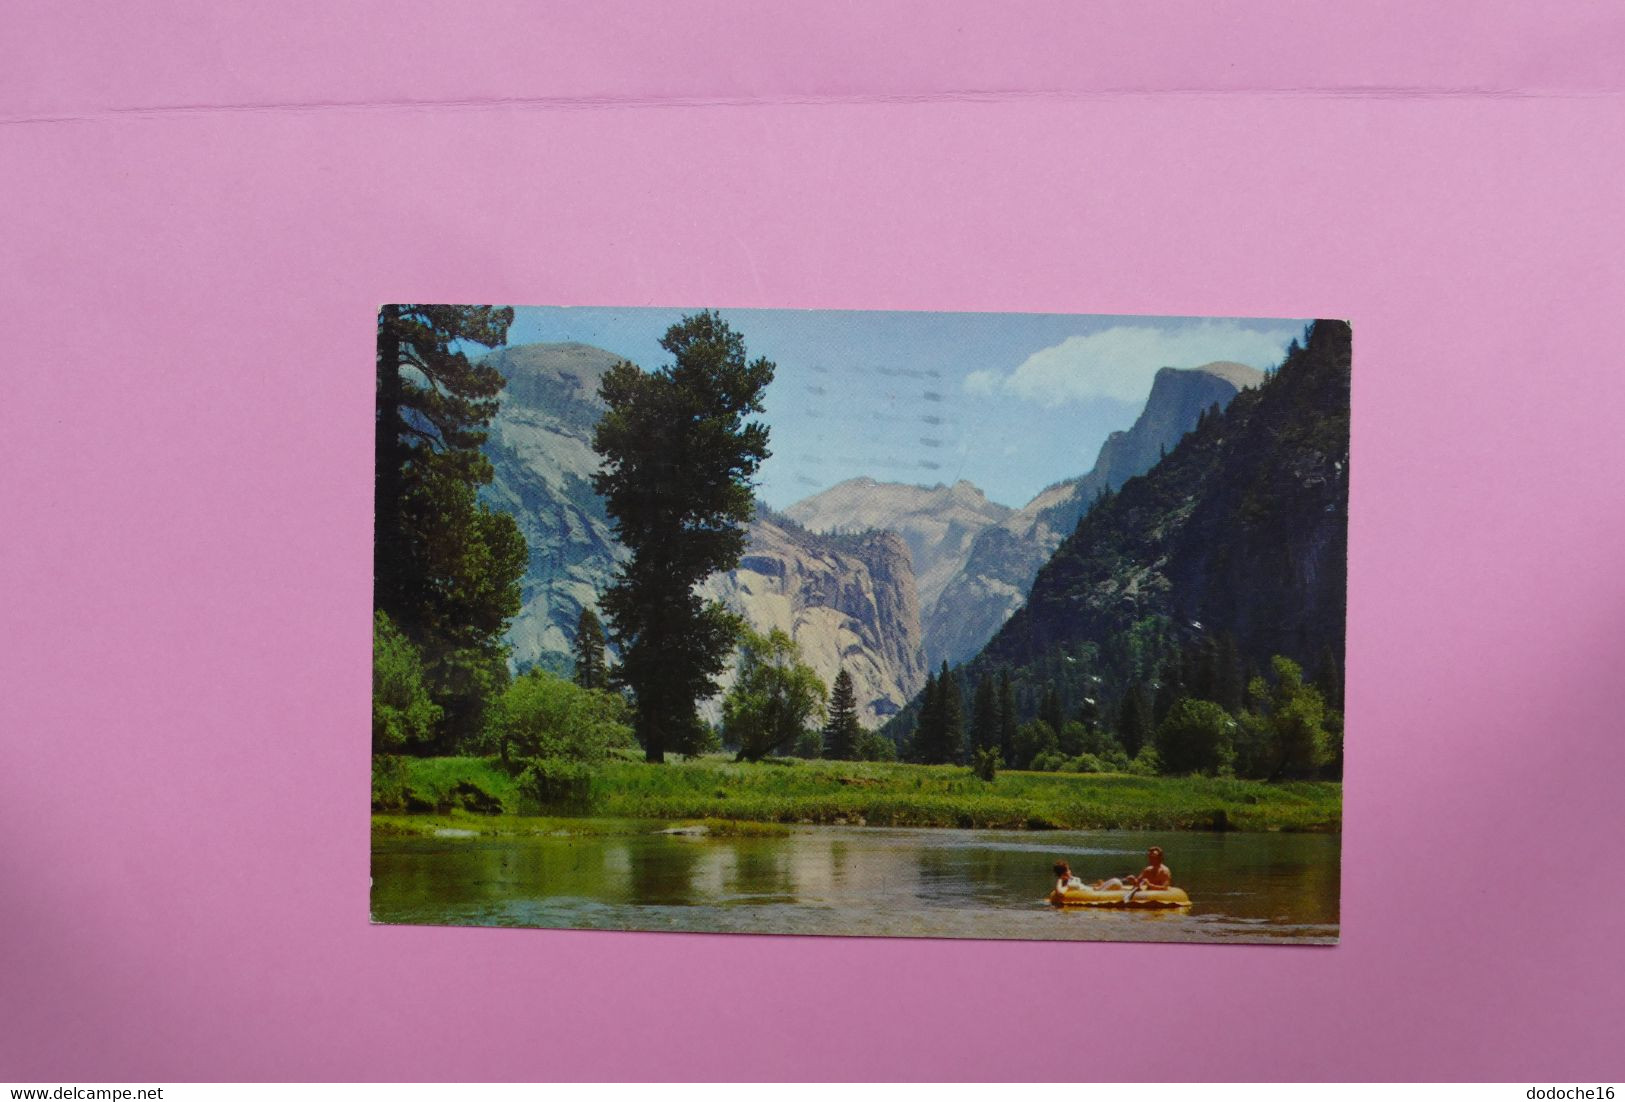 CALIFORNIA - HALF DOME AND THE MERCED RIVER YOSEMITE NATIONAL PARK - Yosemite